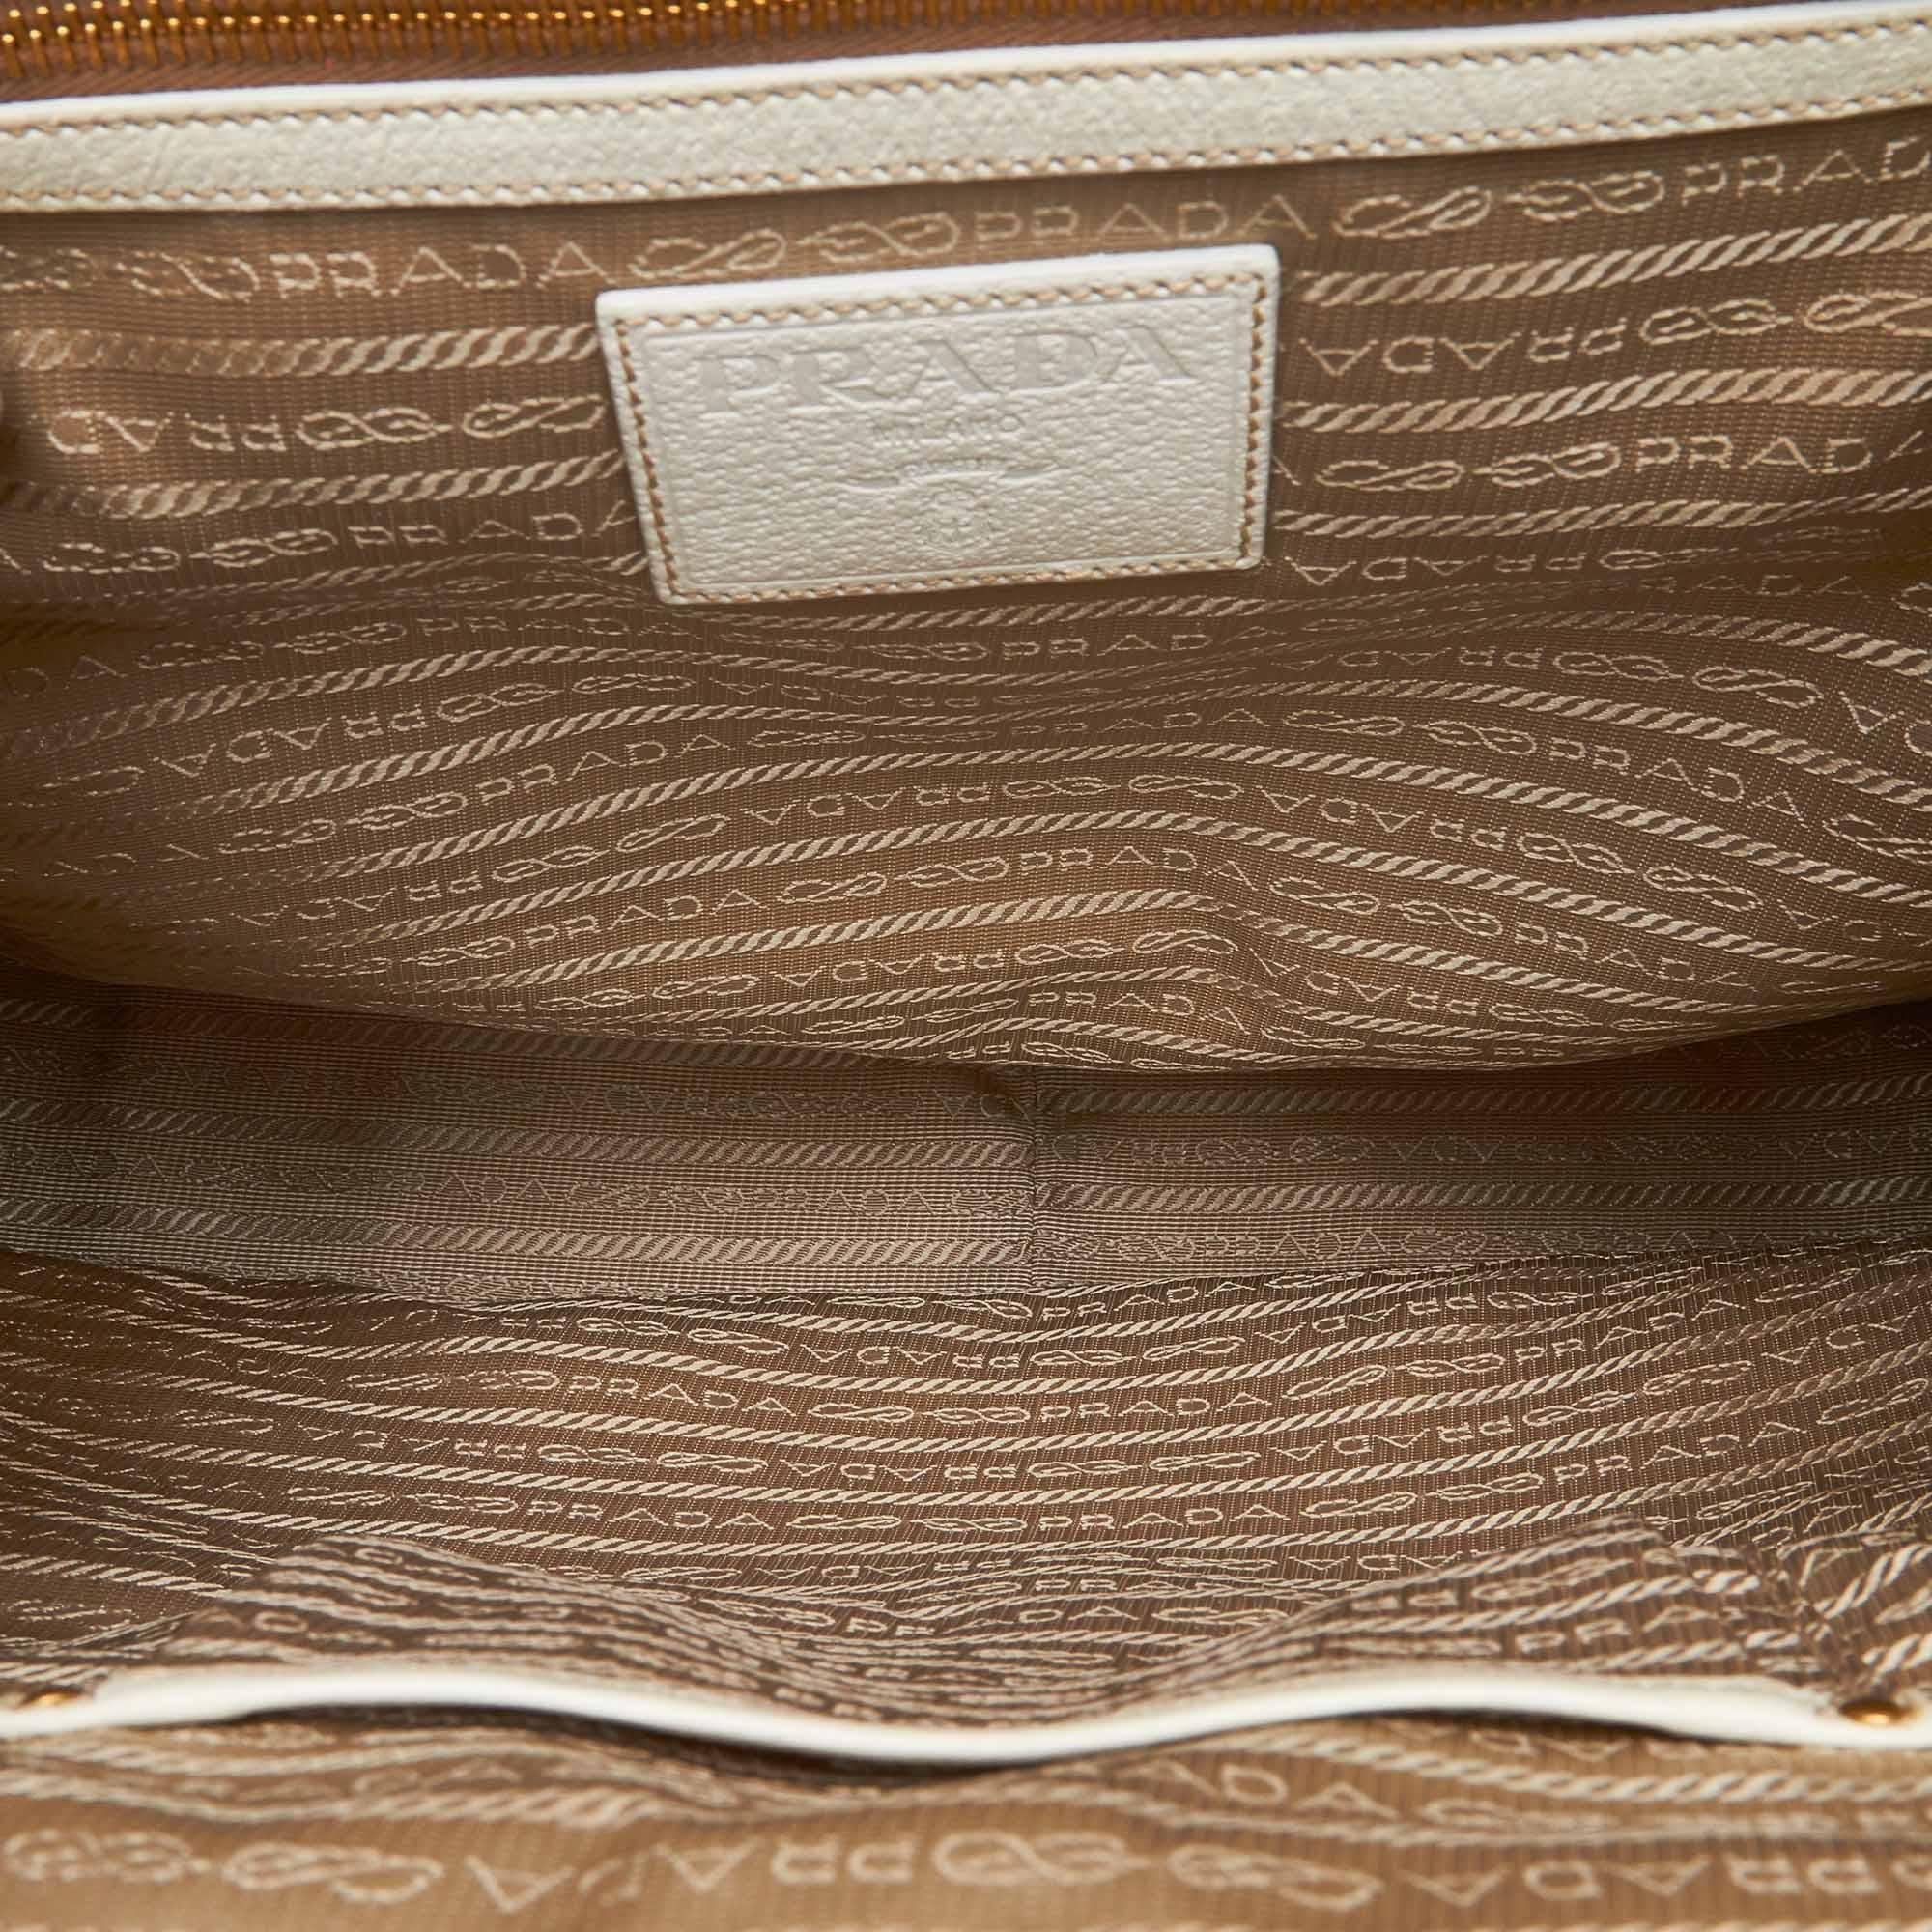 Prada Brown Beige Straw Natural Material Chain Shoulder Bag Italy 1